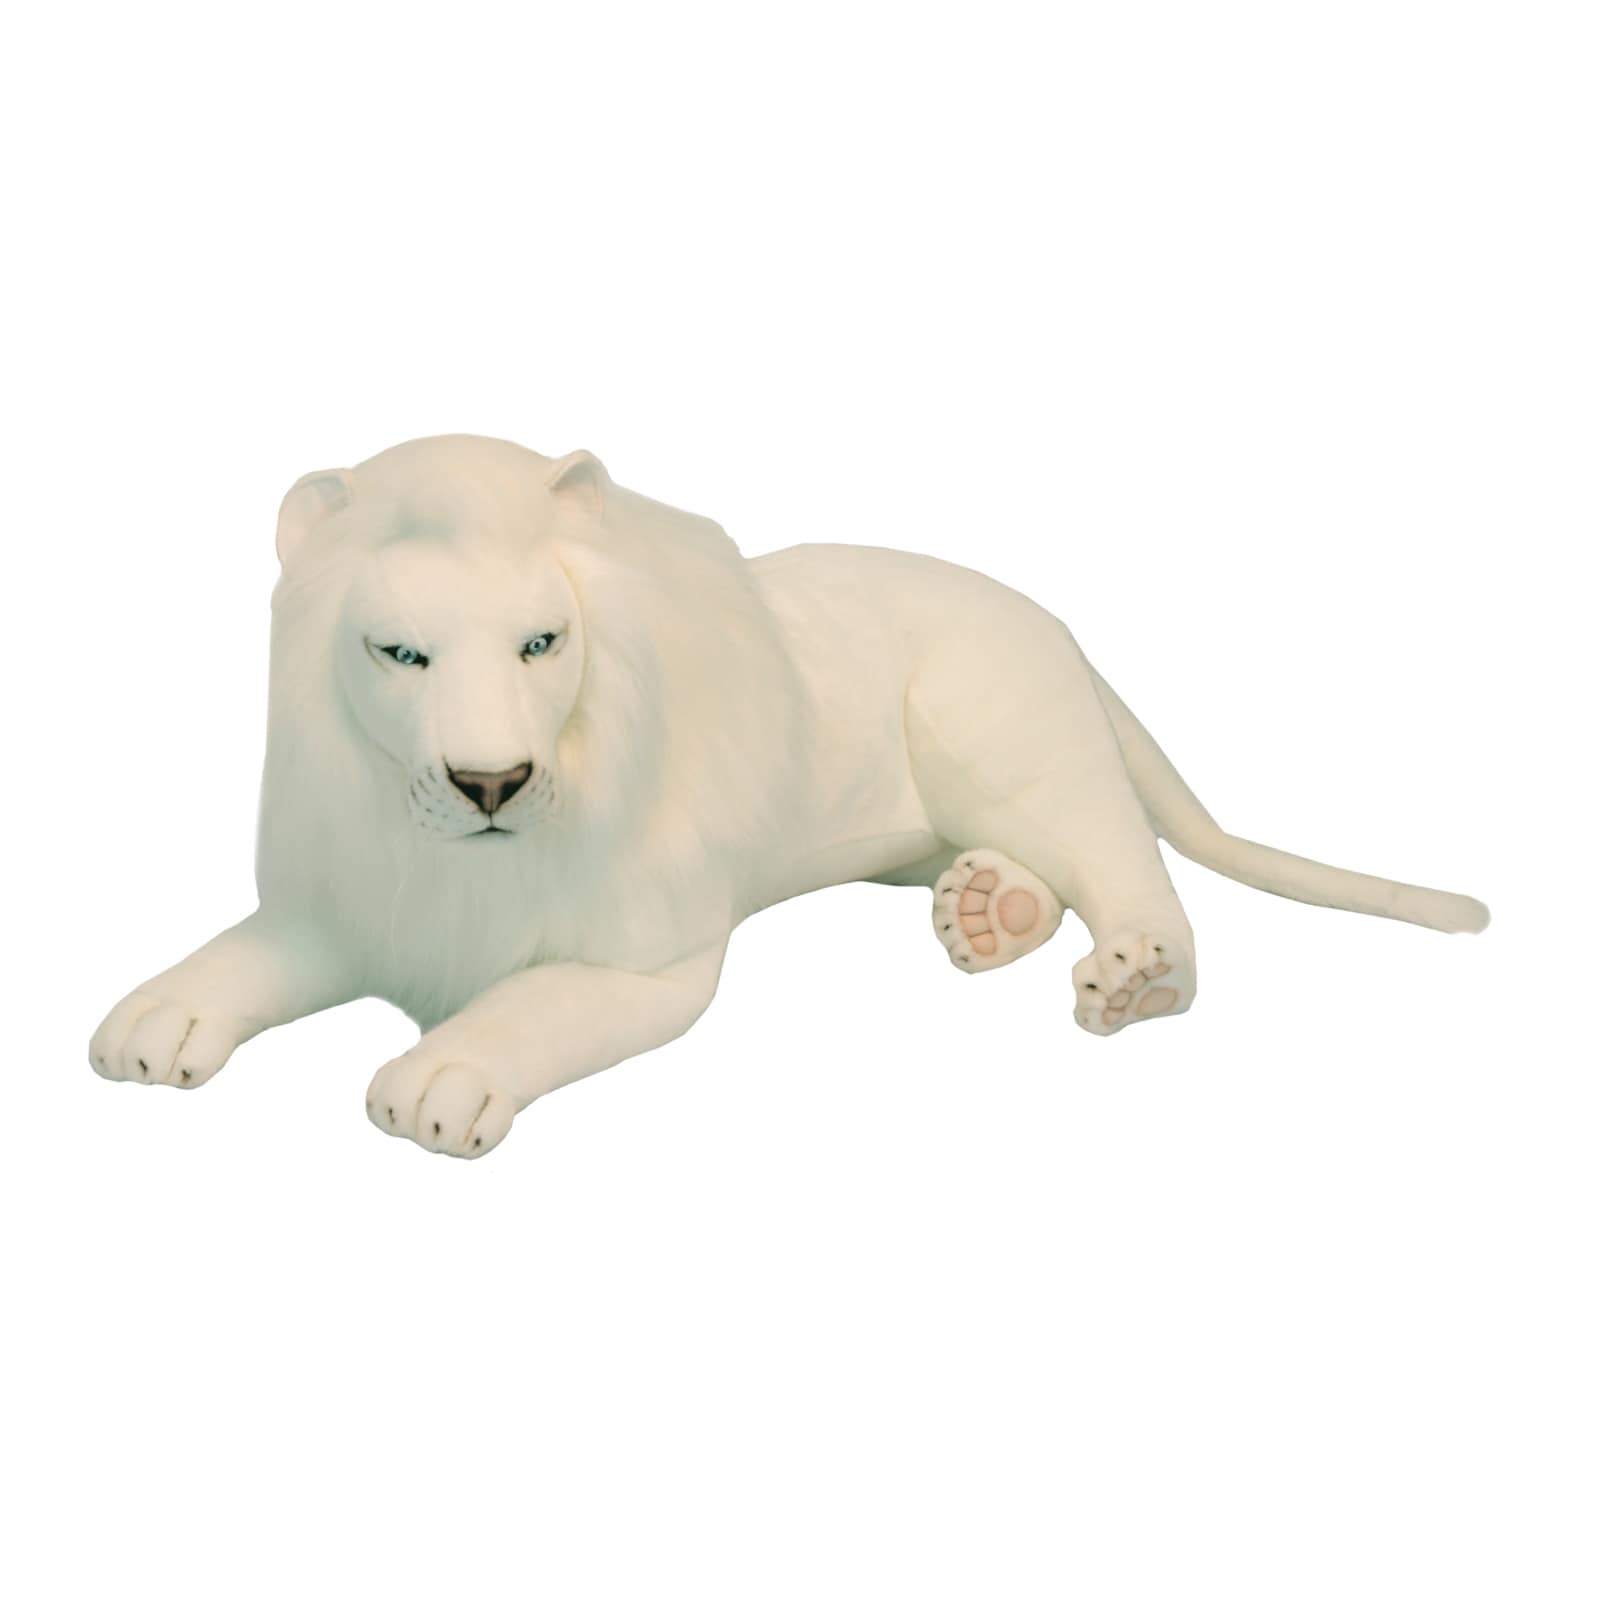 white lion stuffed animal